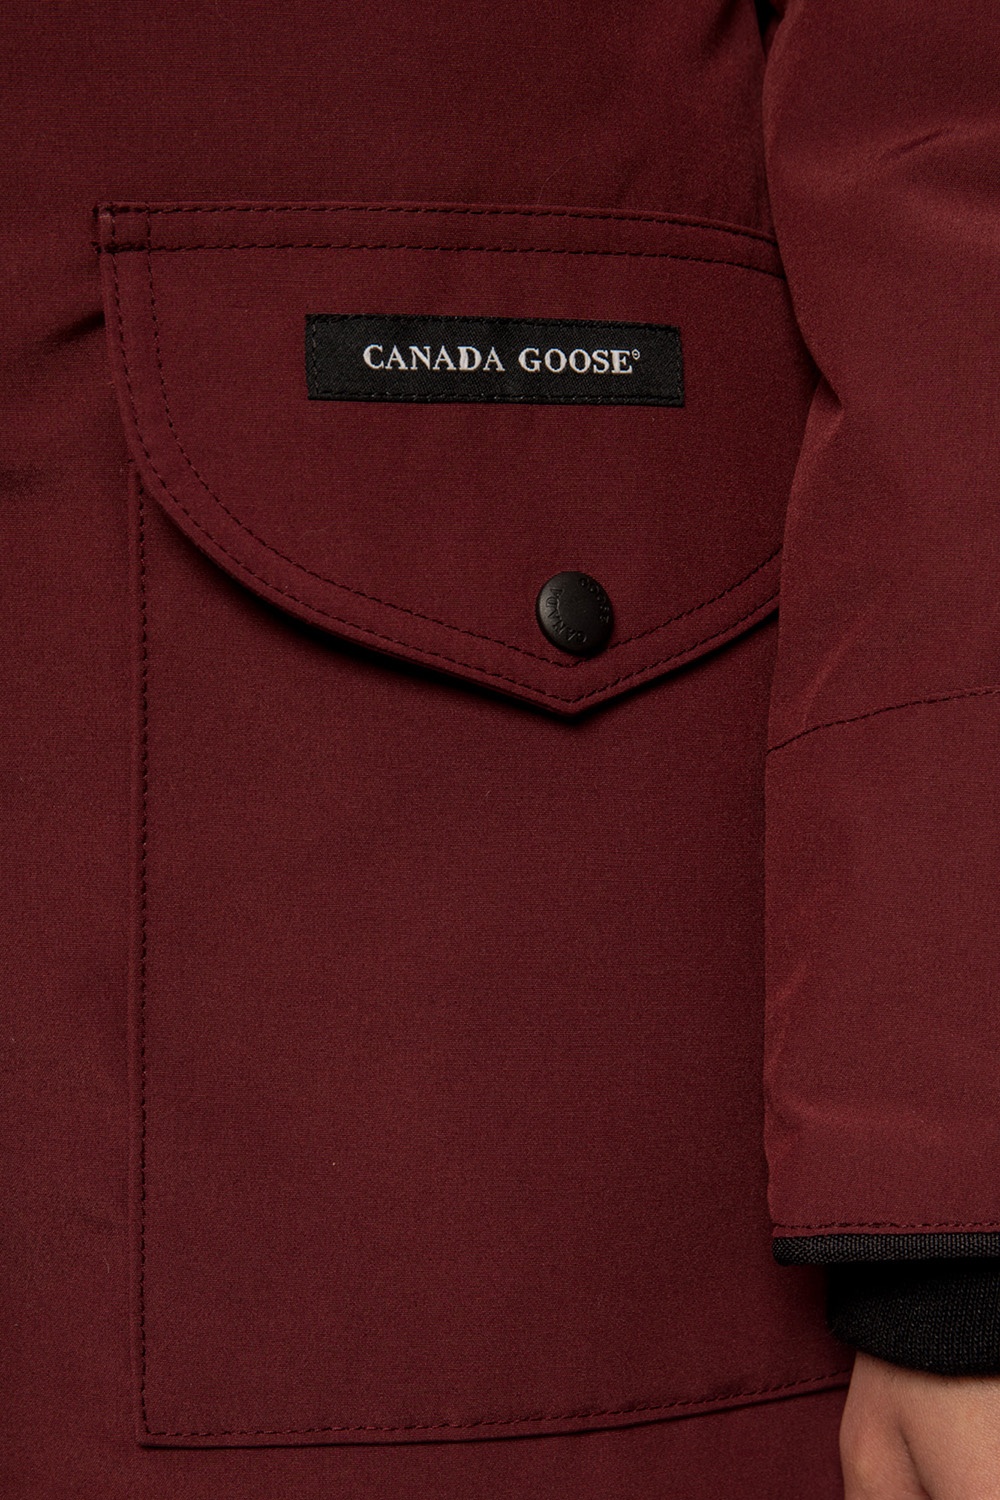 Canada Goose ‘Trillium’ logo-patched jacket